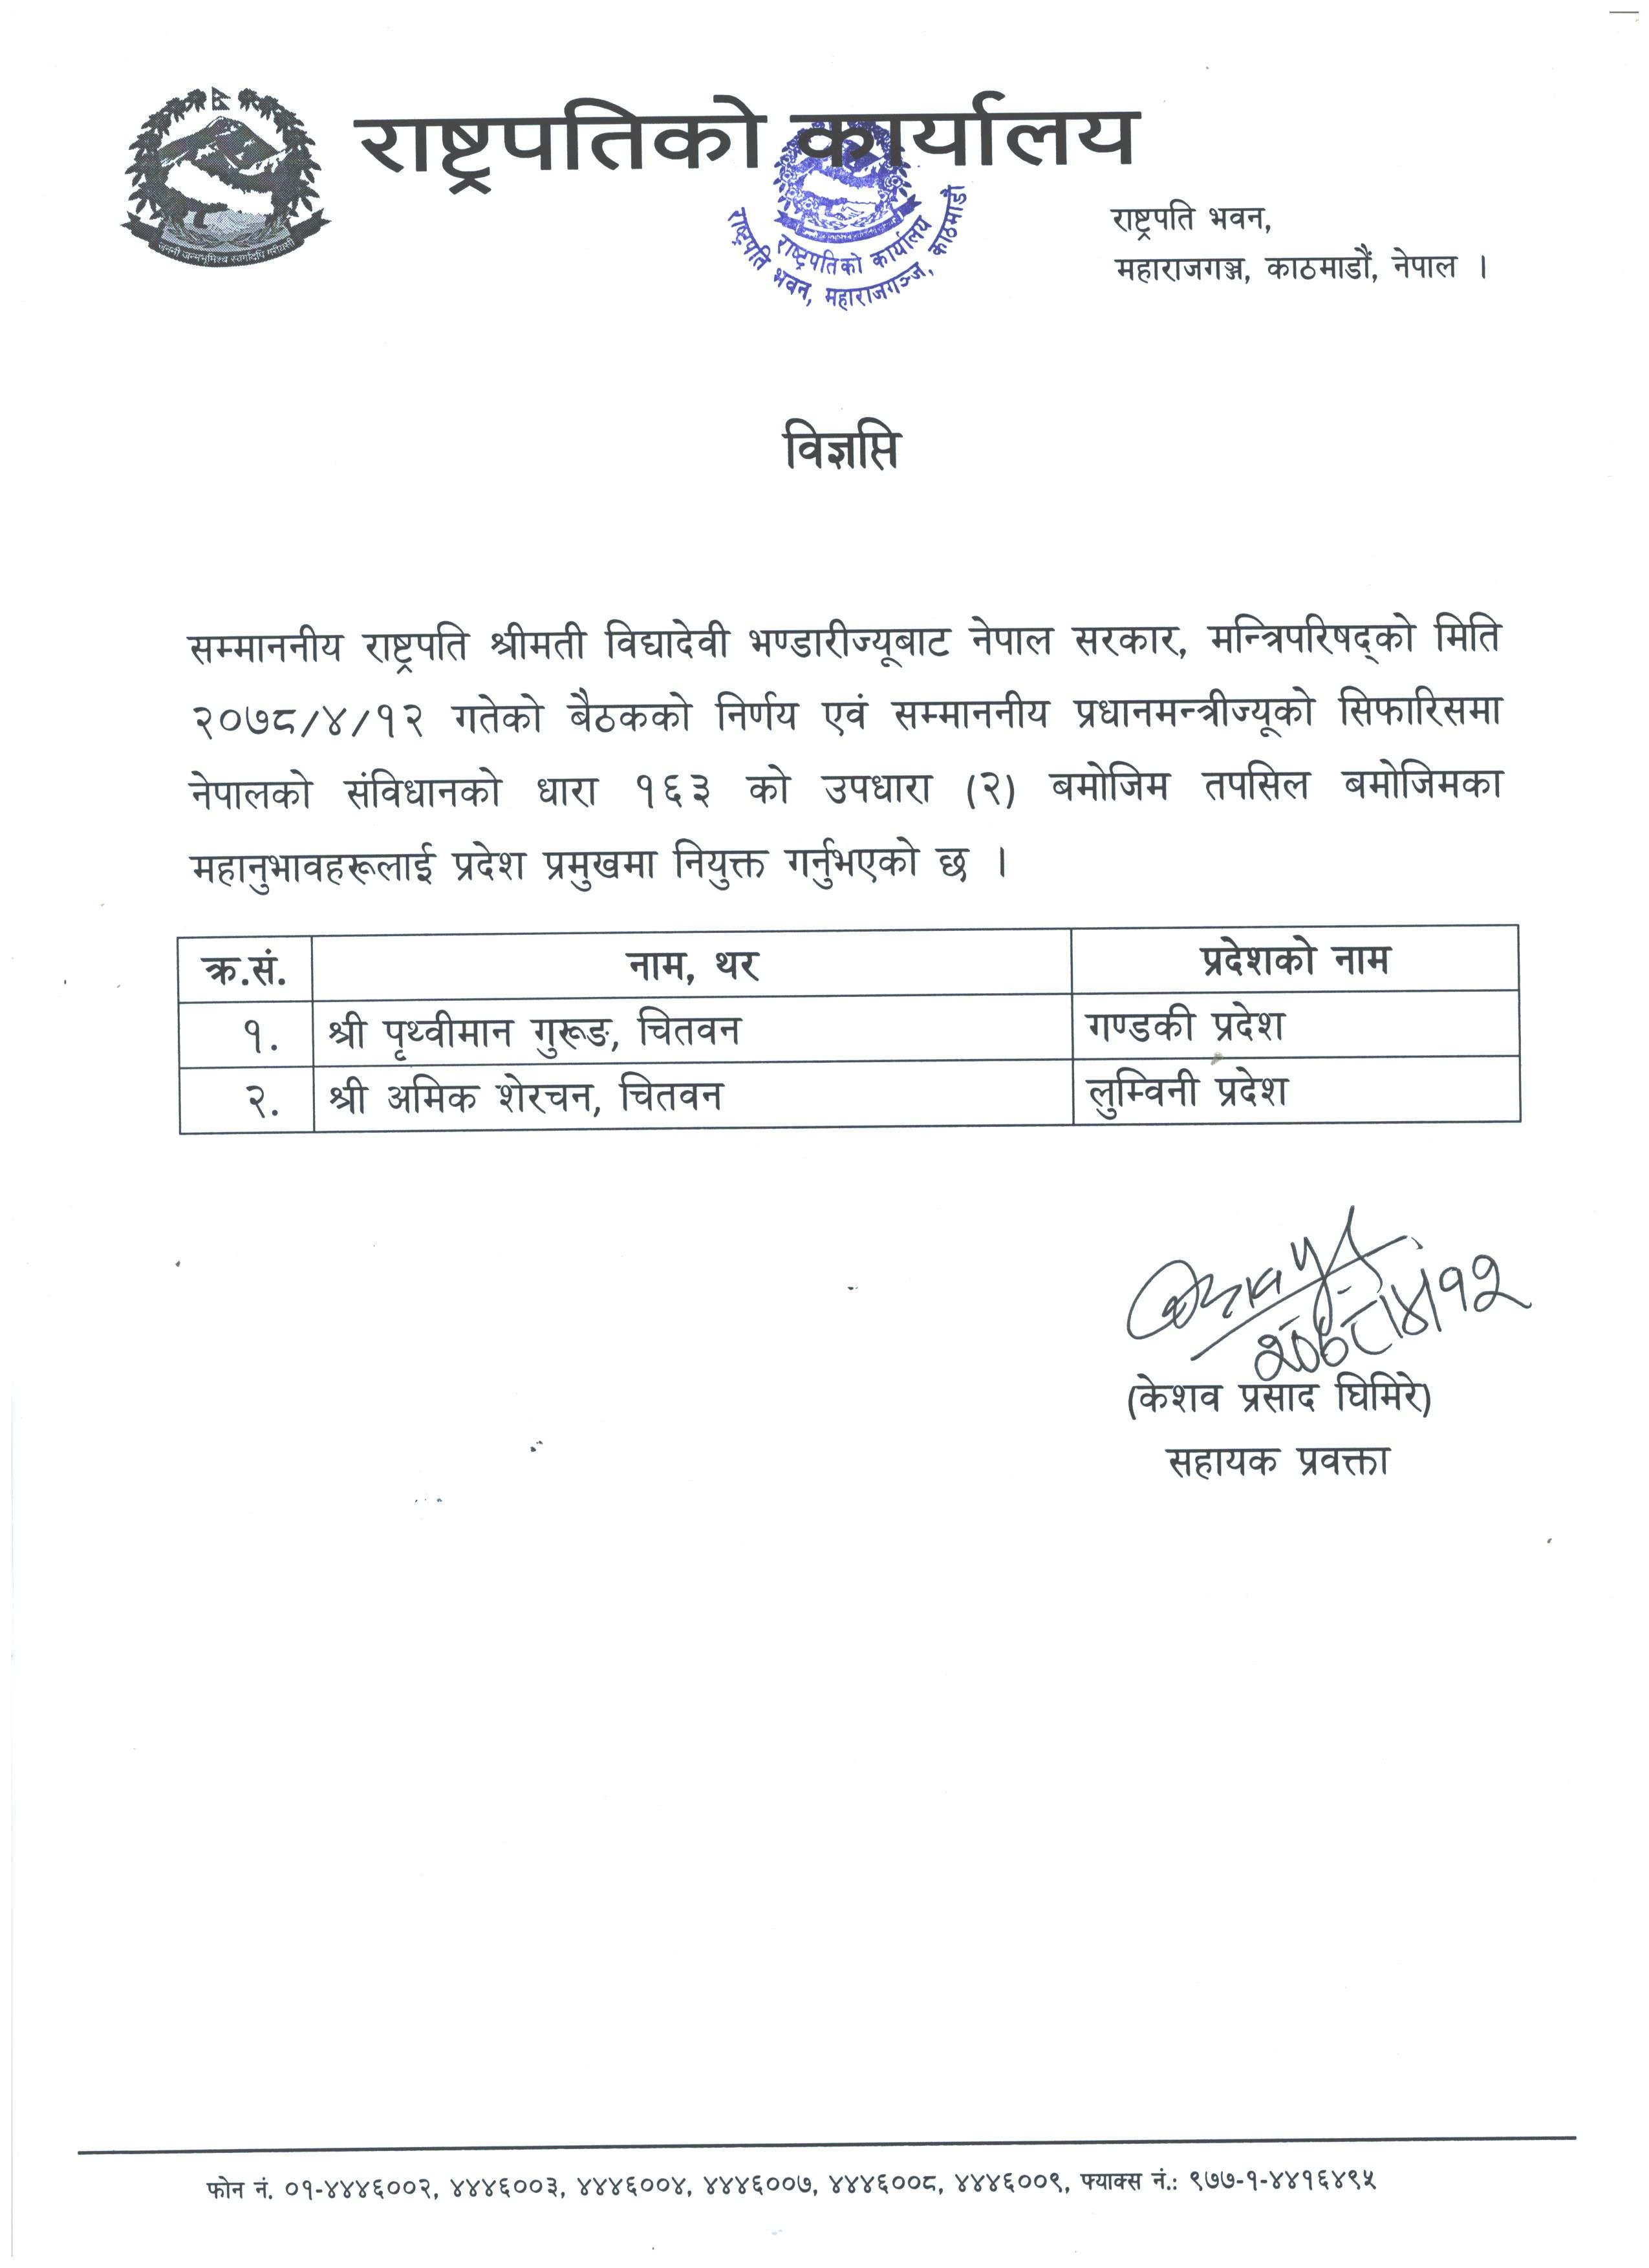 Prez Bhandari appoints new Governors of Gandaki, Lumbini